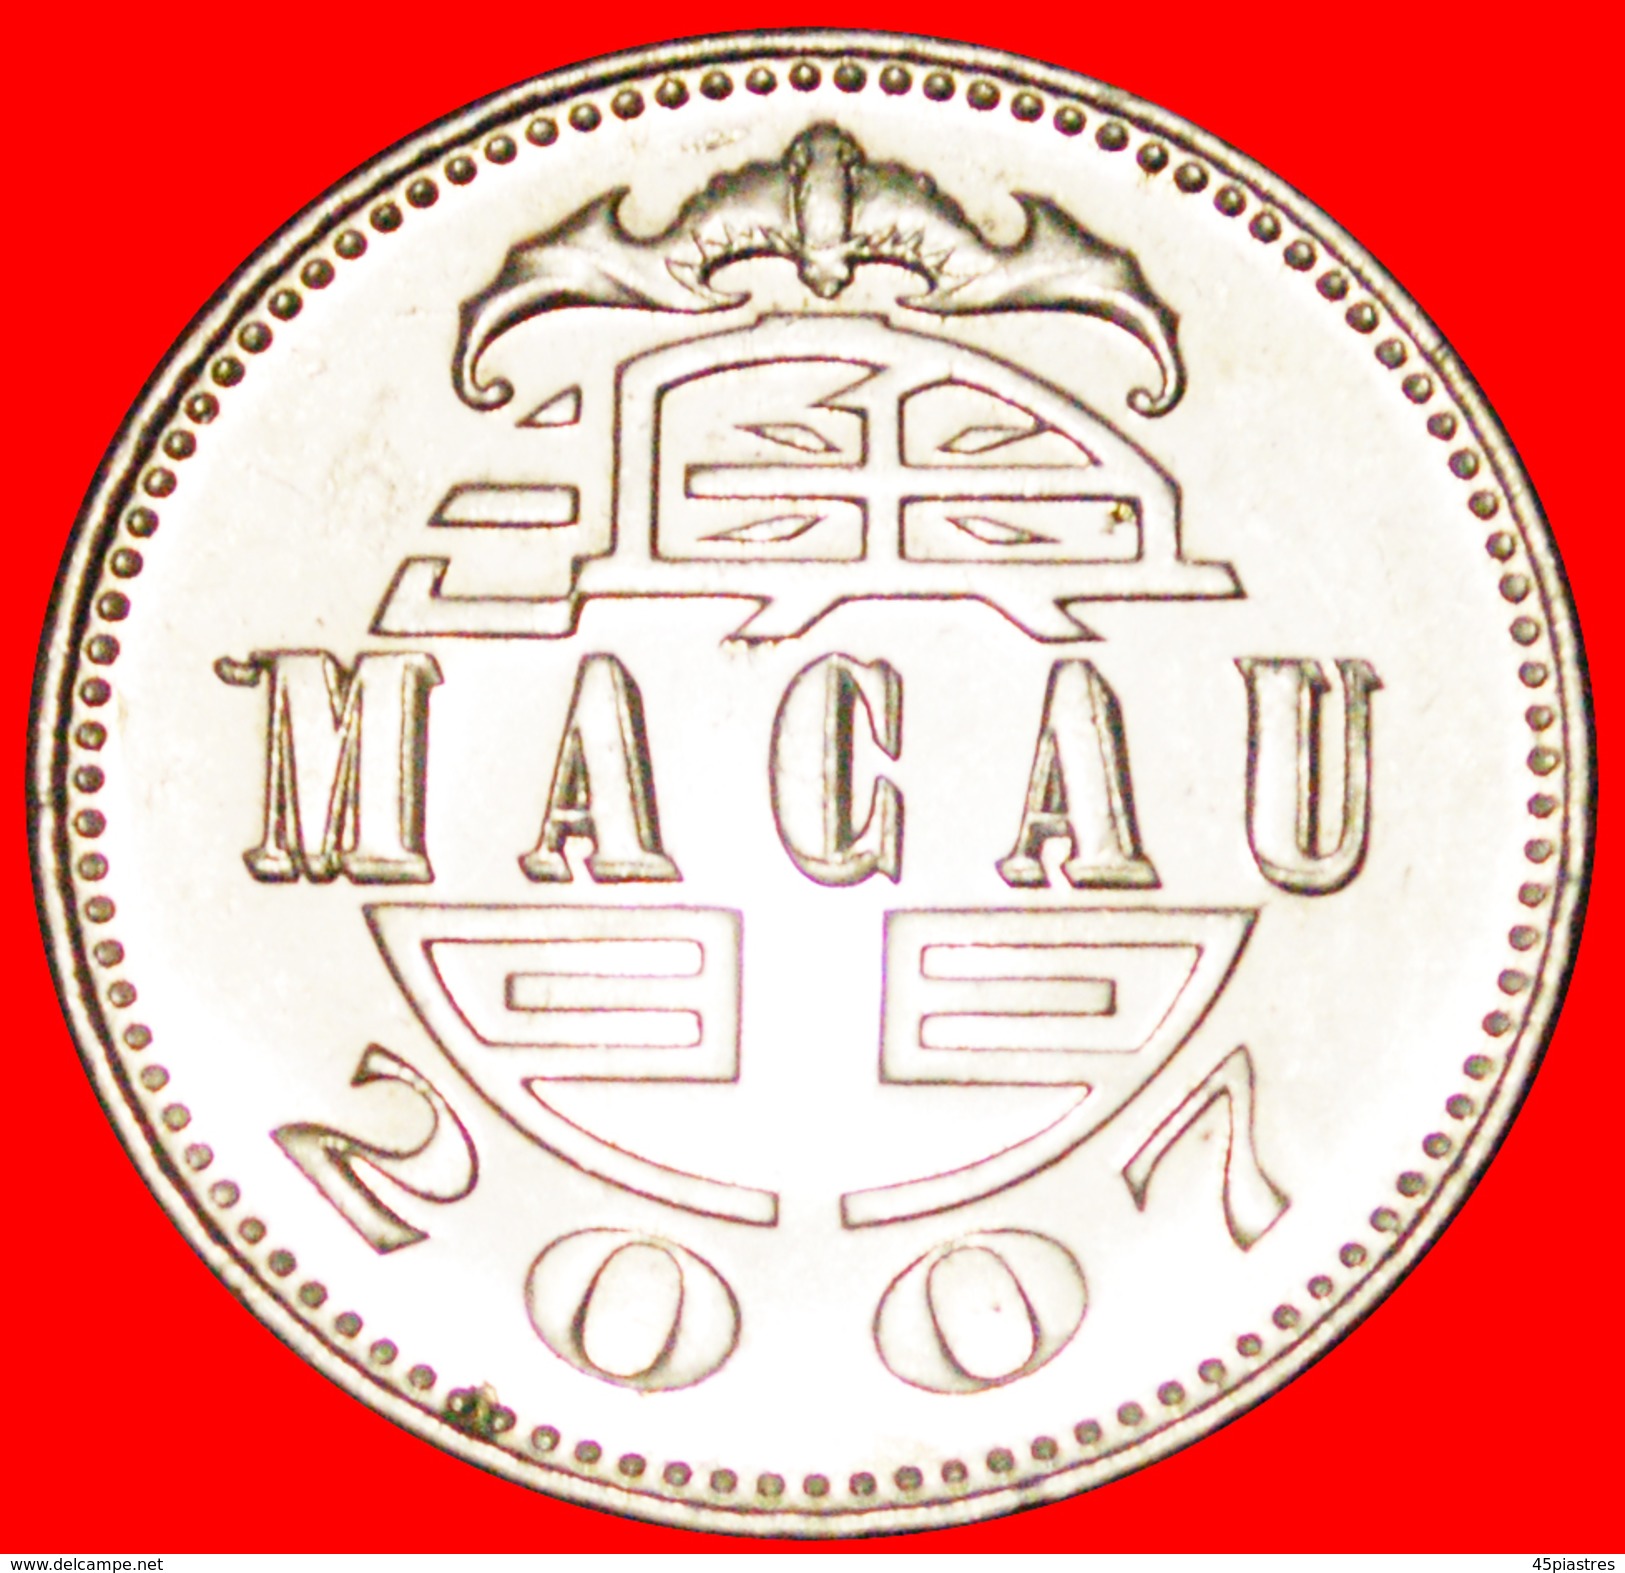 § CASTLE: MACAO★MACAU &#x2605;1 PATACA 2007 MINT LUSTER! LOW START&#x2605; NO RESERVE! - Macau